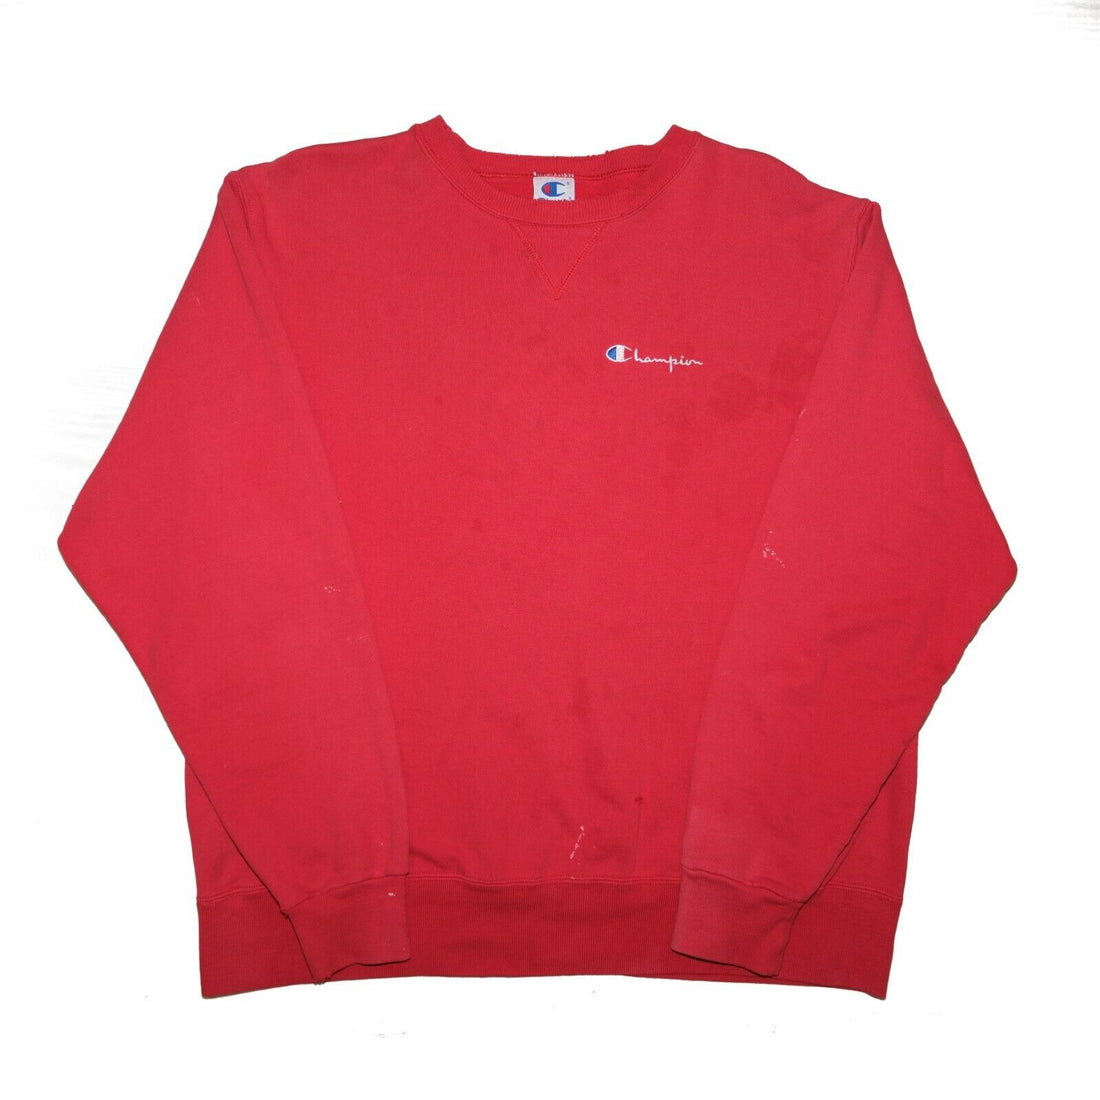 Vintage Champion Sweatshirt Crewneck Size XL Embroidered Red 90s